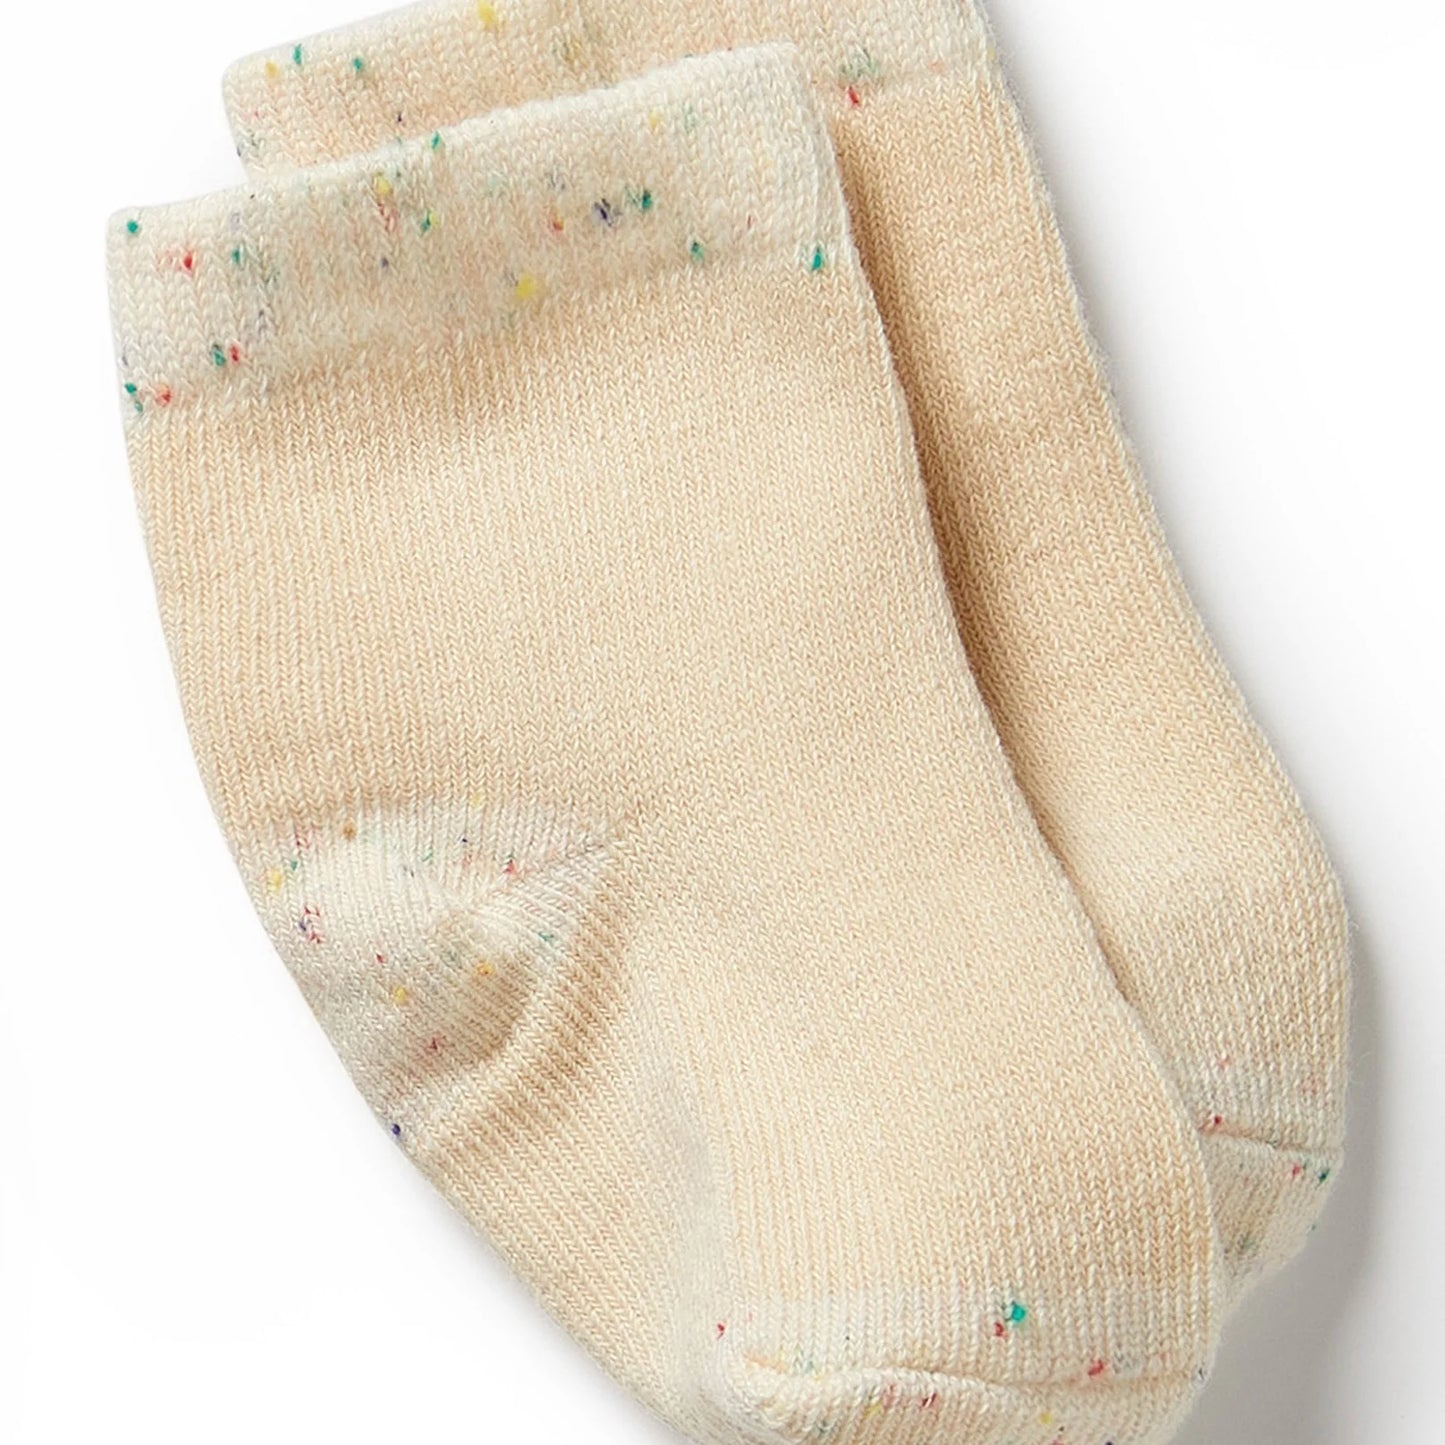 Baby Socks 3 Pack - Mint Green, Cream, Pink